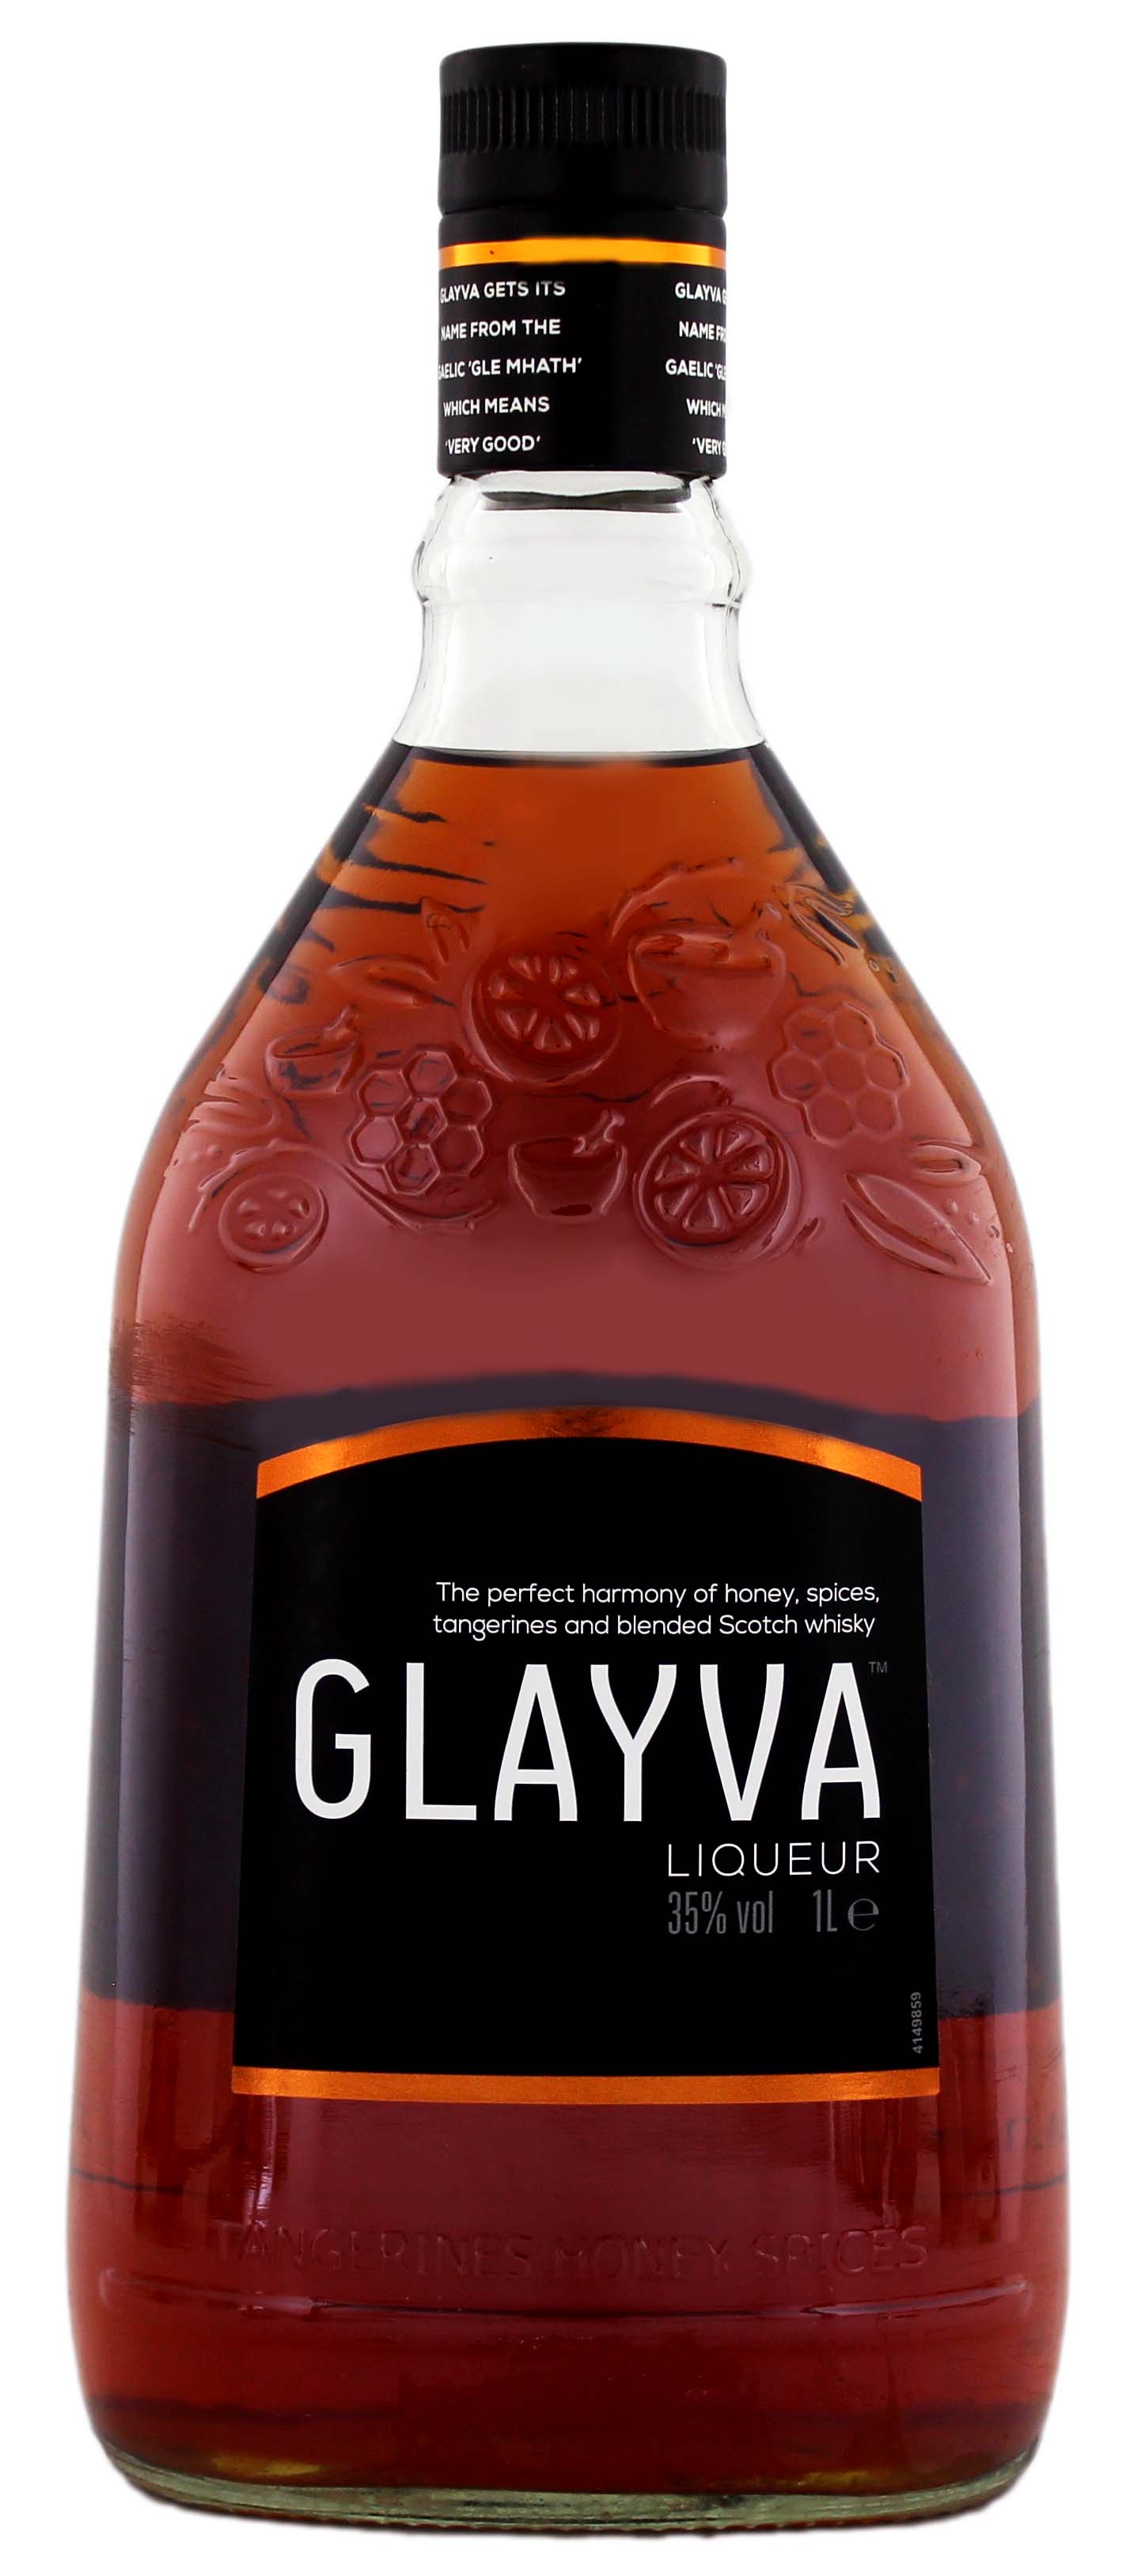 Glayva Whisky Liqueur jetzt kaufen im Drinkology Online Shop !